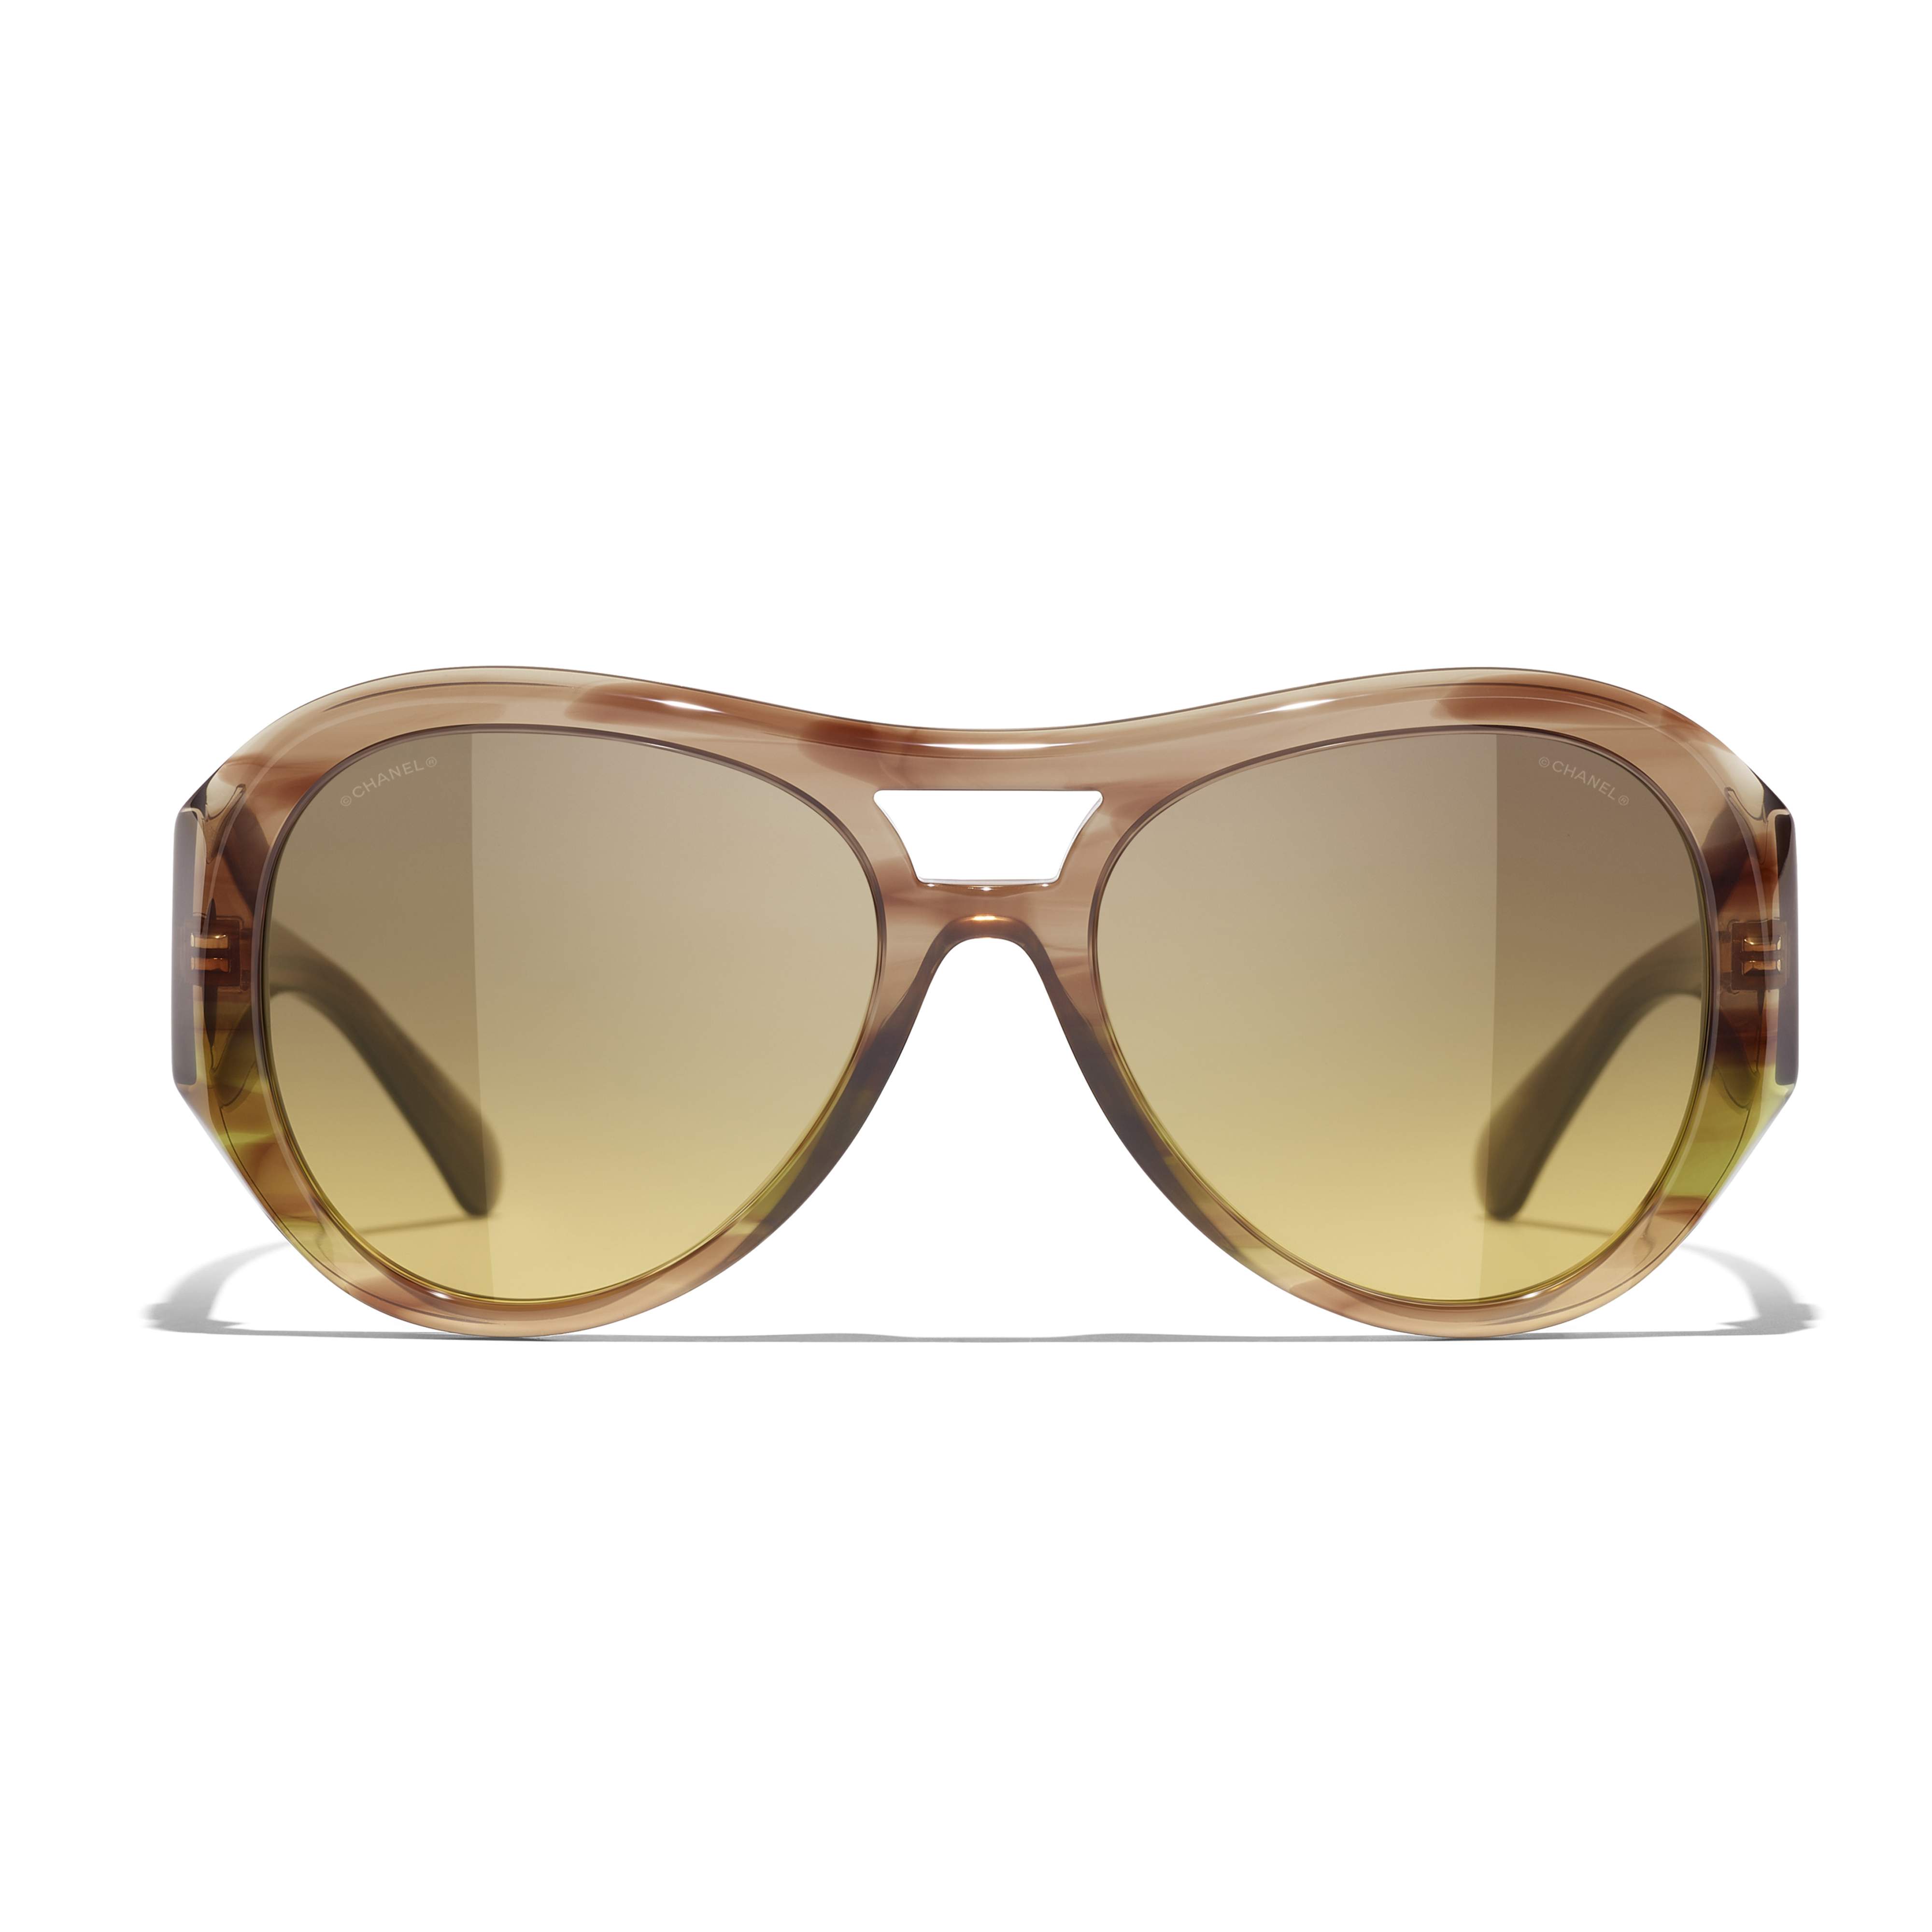 CHANEL Irregular Sunglasses CH5478 Dark Havana/Brown Gradient at